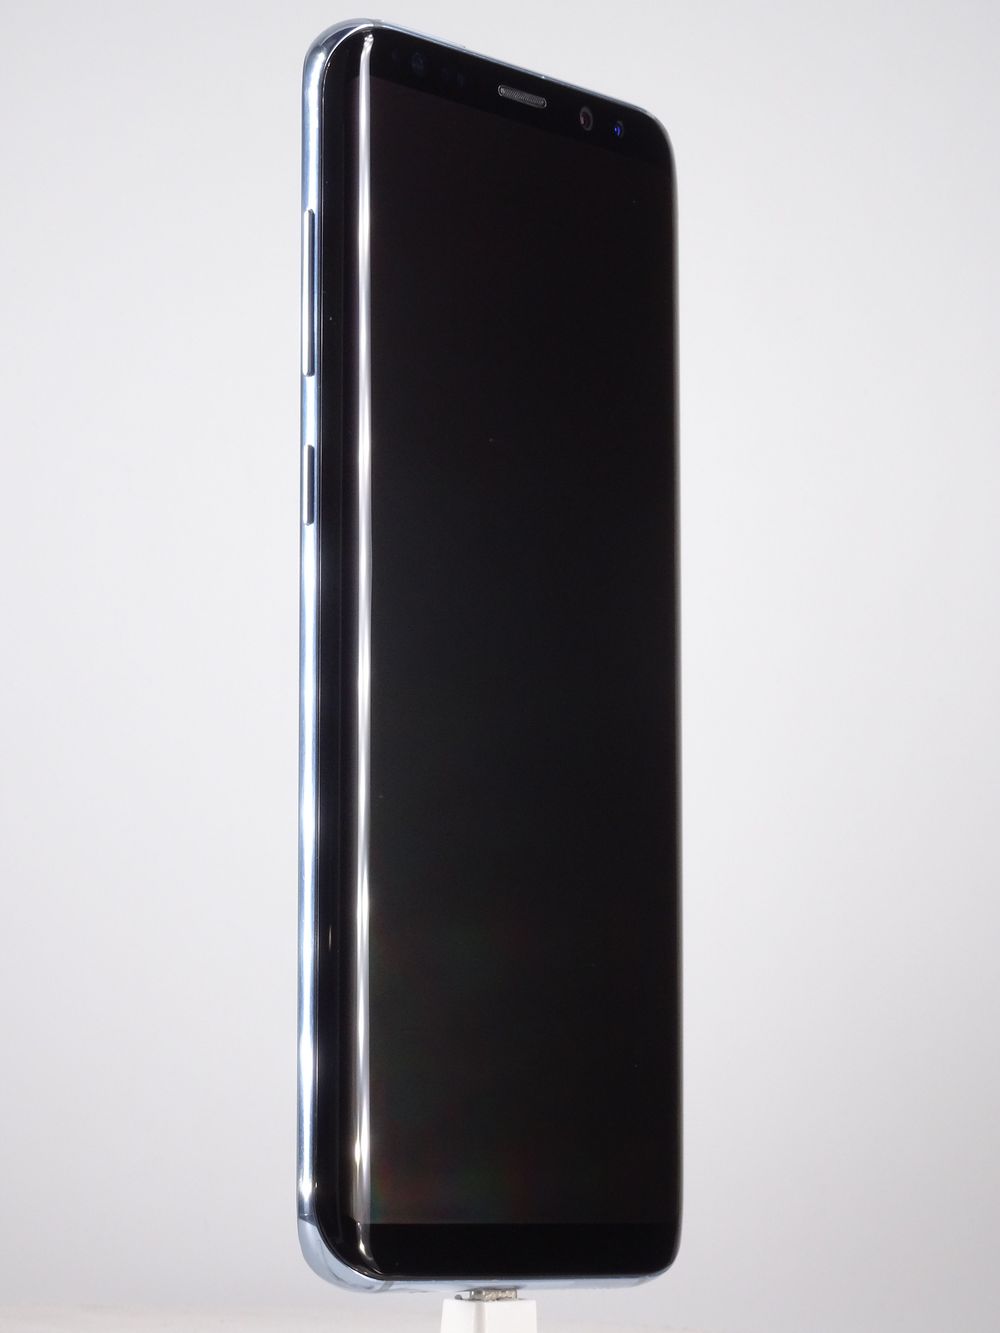 Мобилен телефон Samsung Galaxy S8 Plus Dual Sim, Coral Blue, 64 GB, Bun